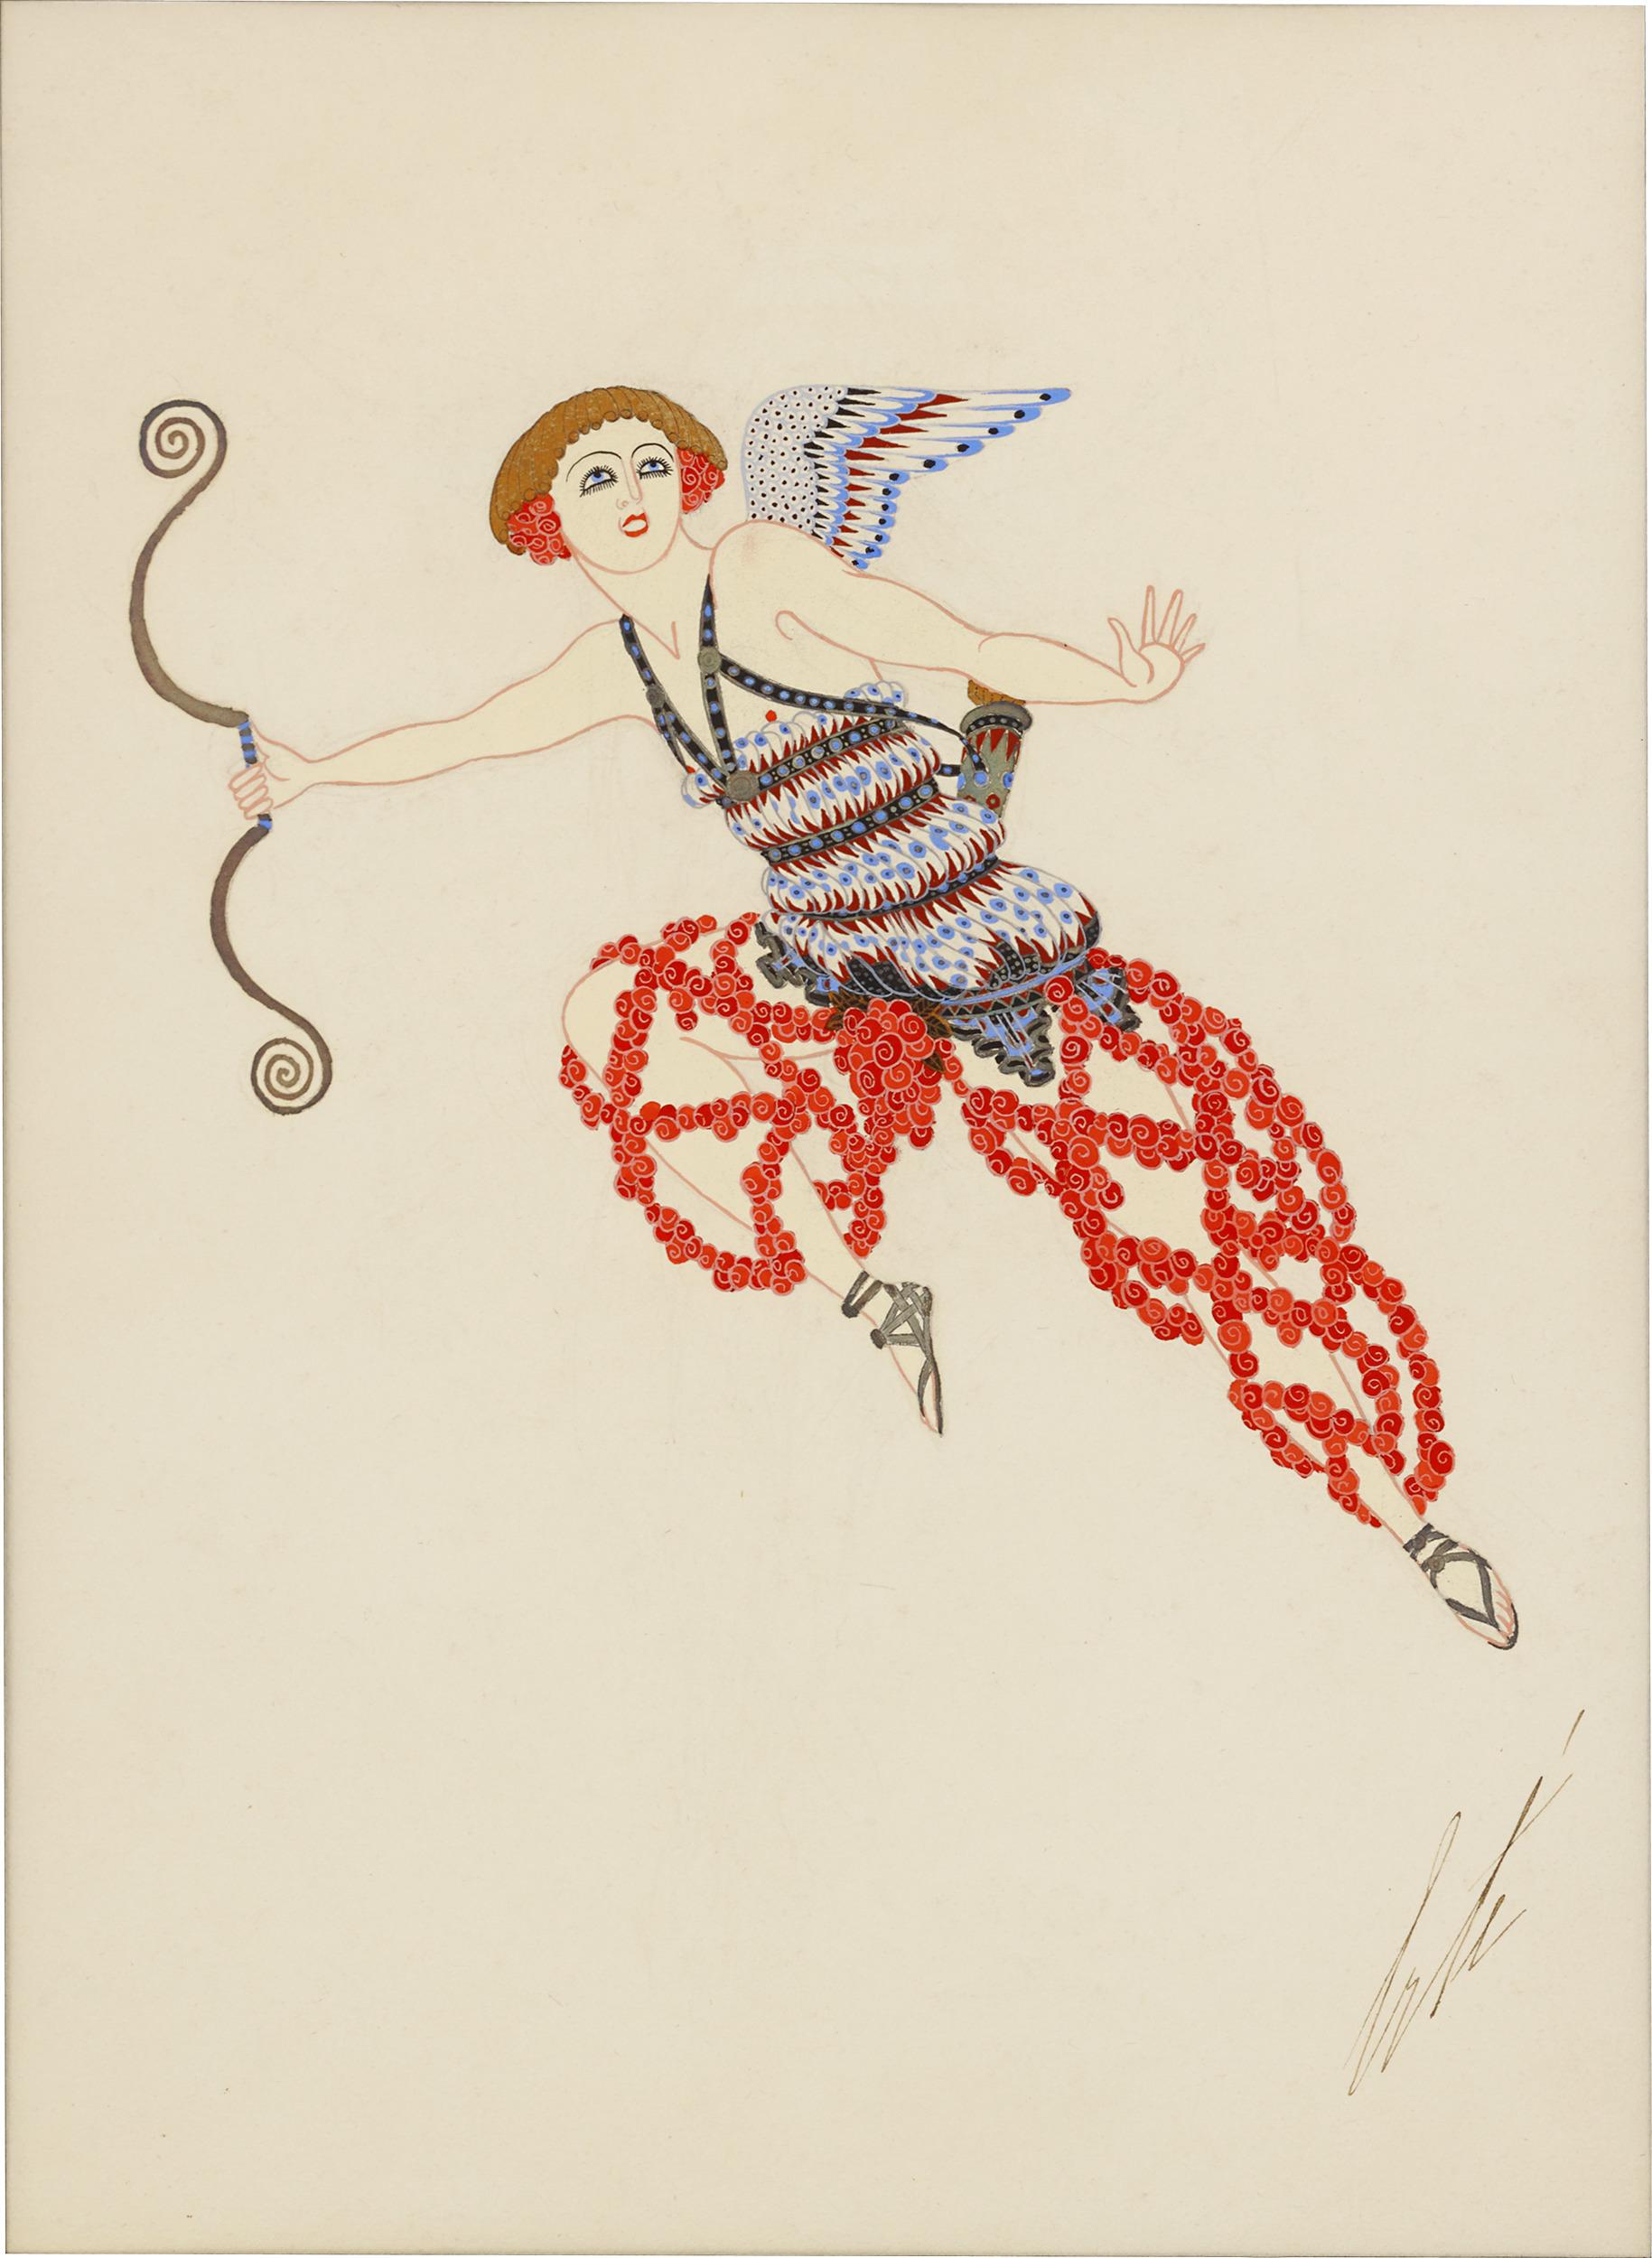 Erté (Romain de Tirtoff)
1892-1990  Russisch-Französisch
Eros

Signiert 